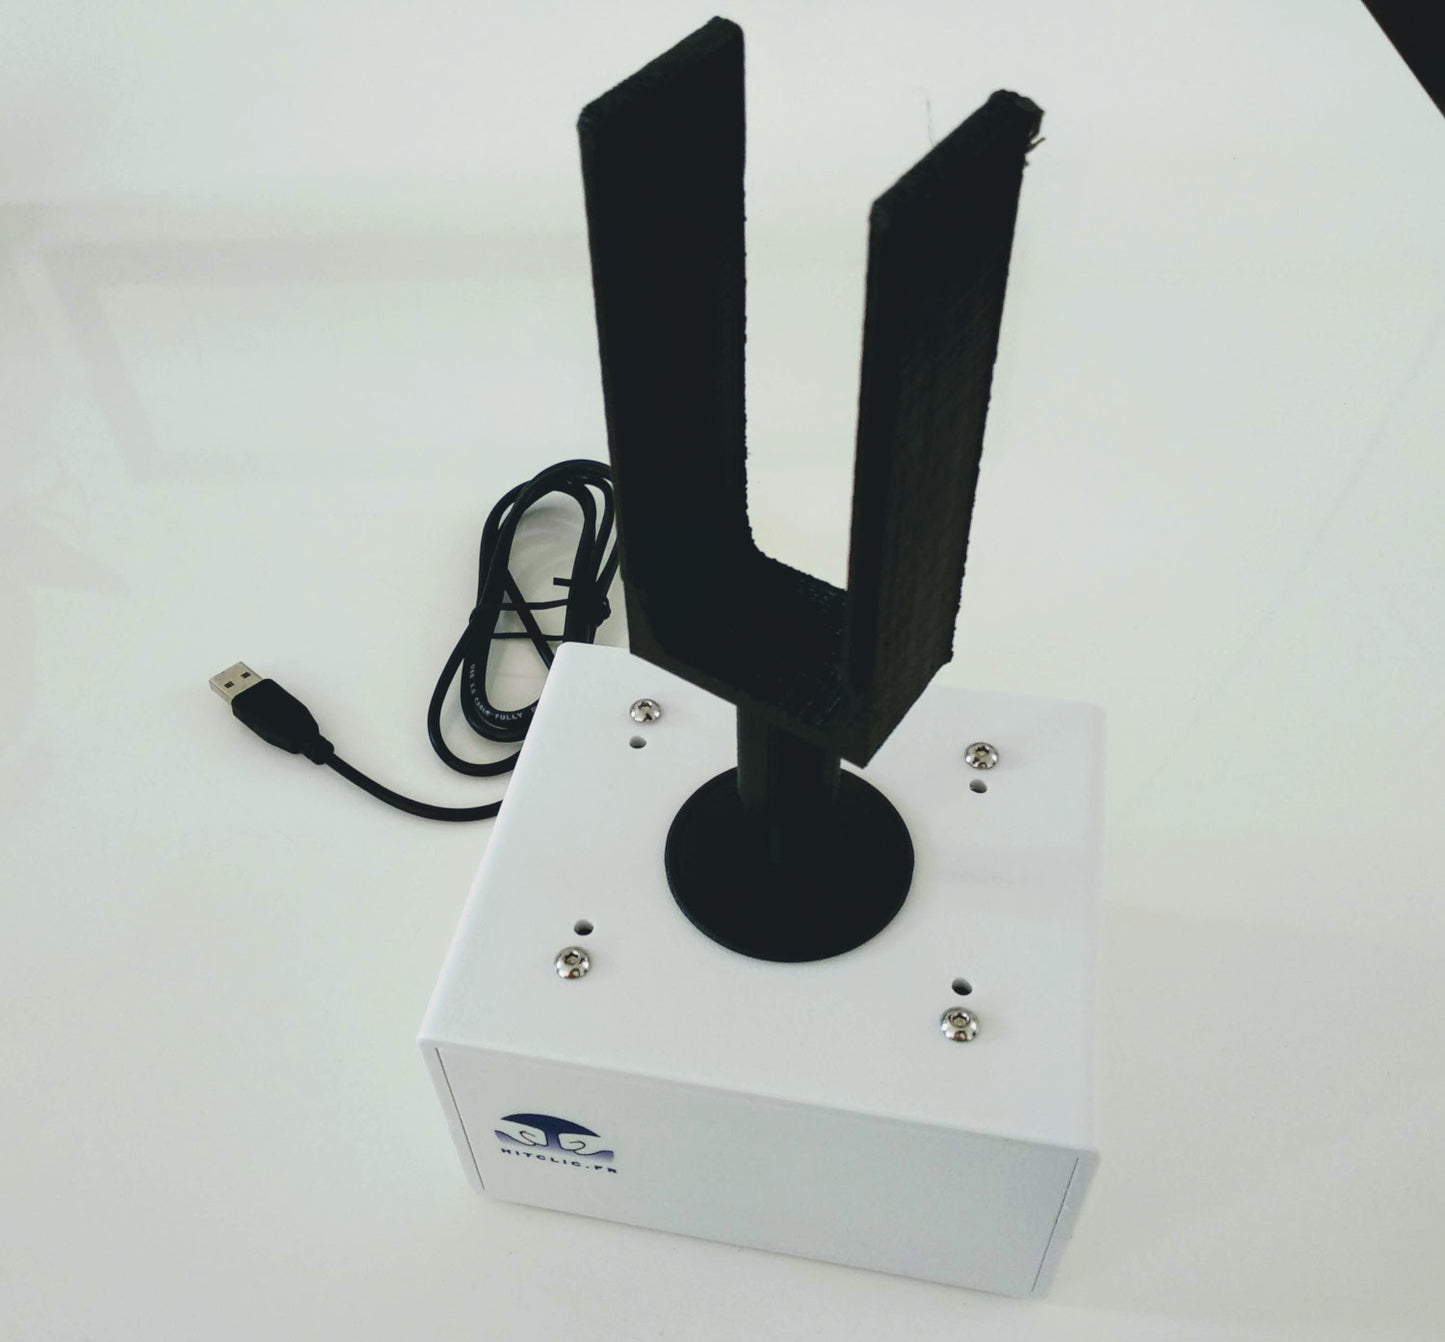 Joystick analogique 360 USB - poignée ergonomique